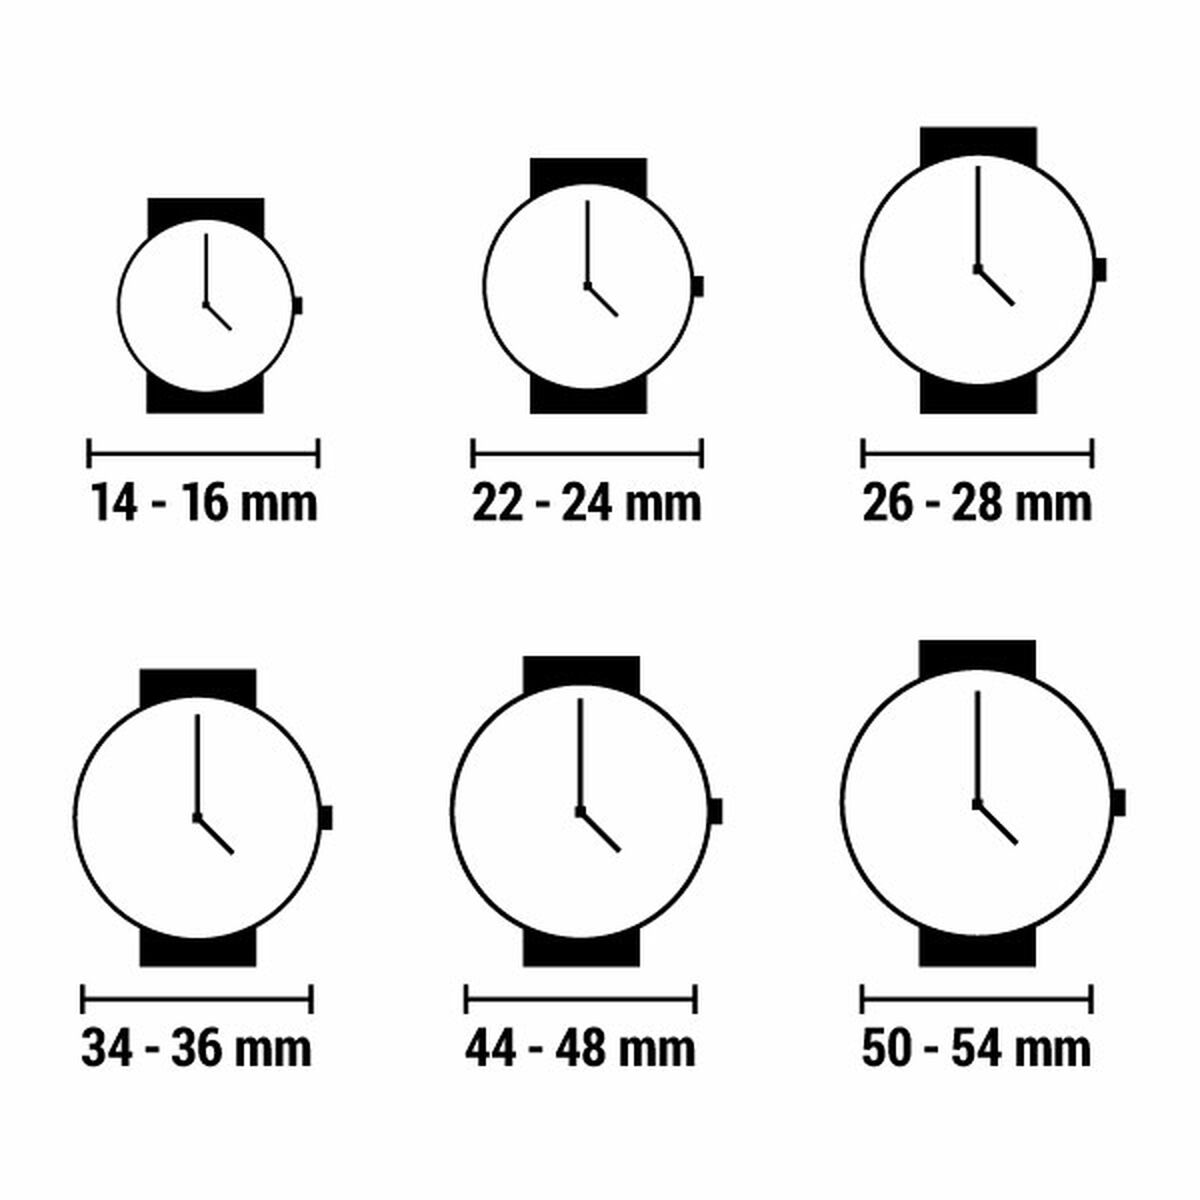 Horloge Heren Nautica NAD16552G (Ø 44 mm)